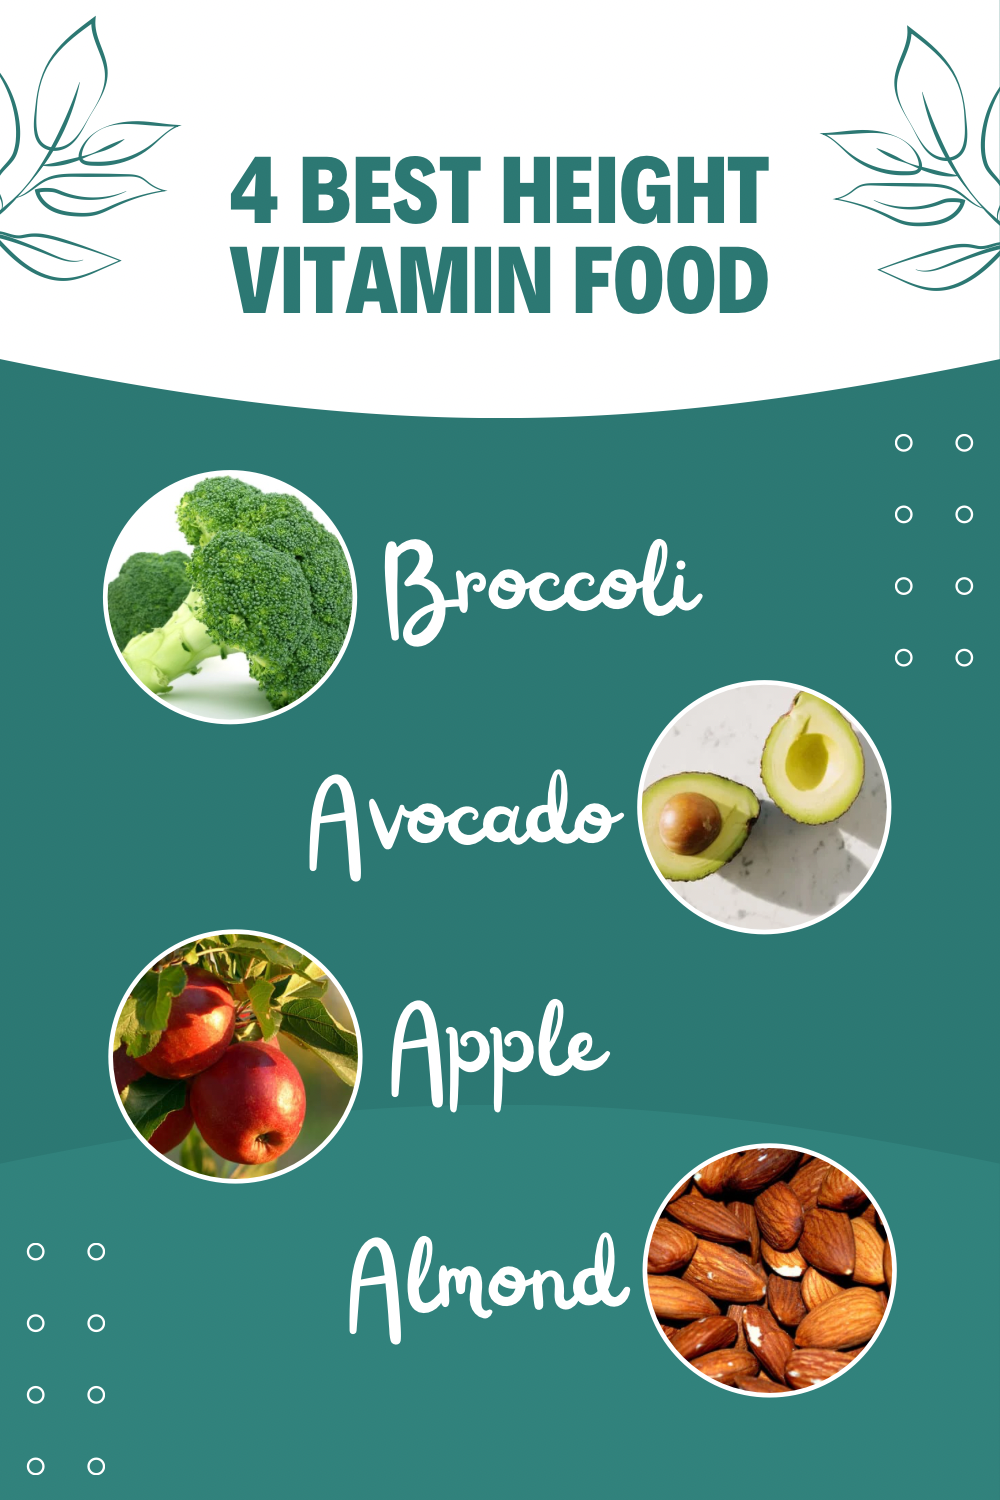 4 Best Height Vitamin Food